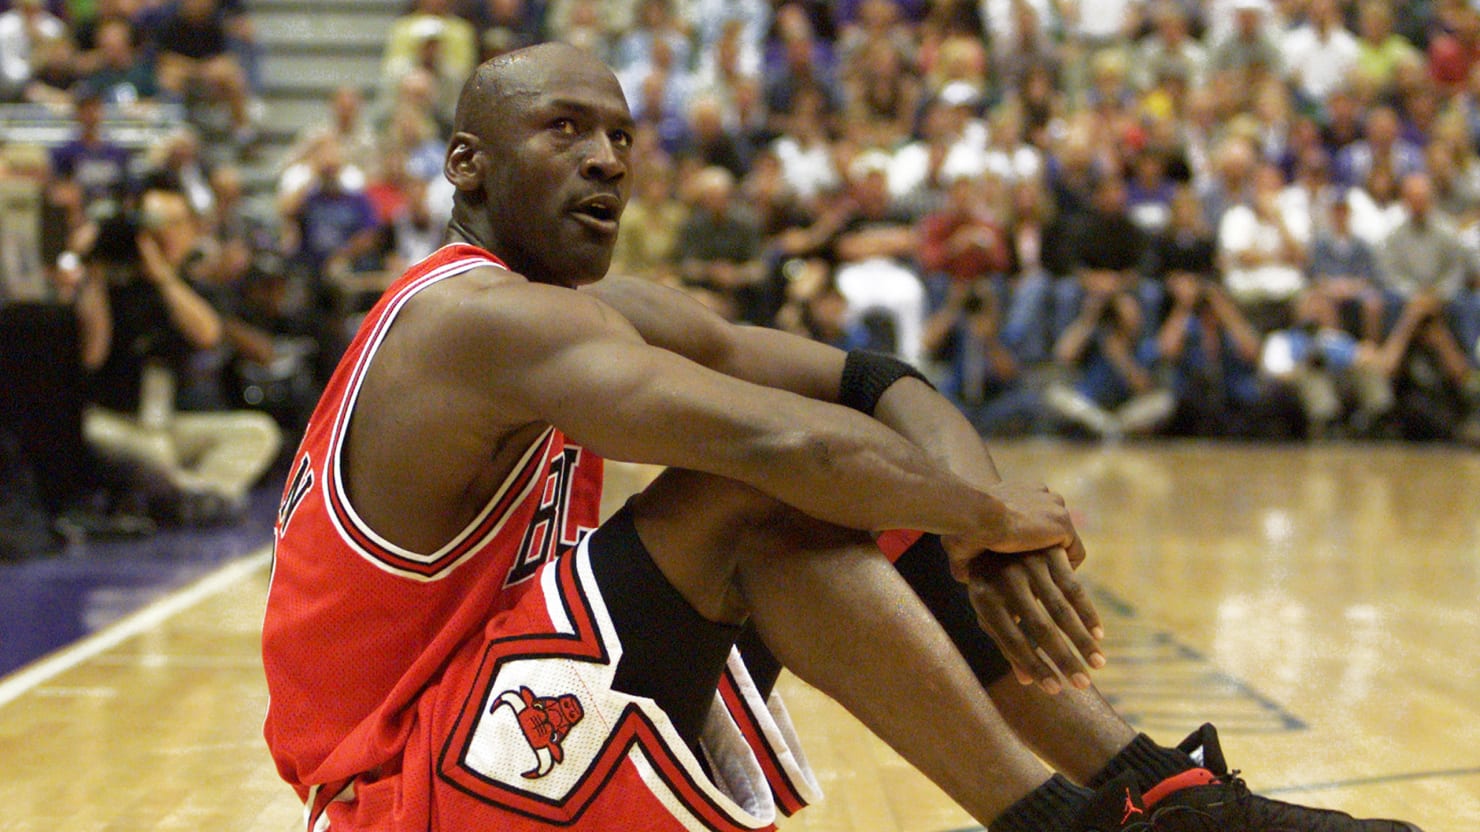 Speed Read: The Juiciest Bits of a New Michael Jordan Biography